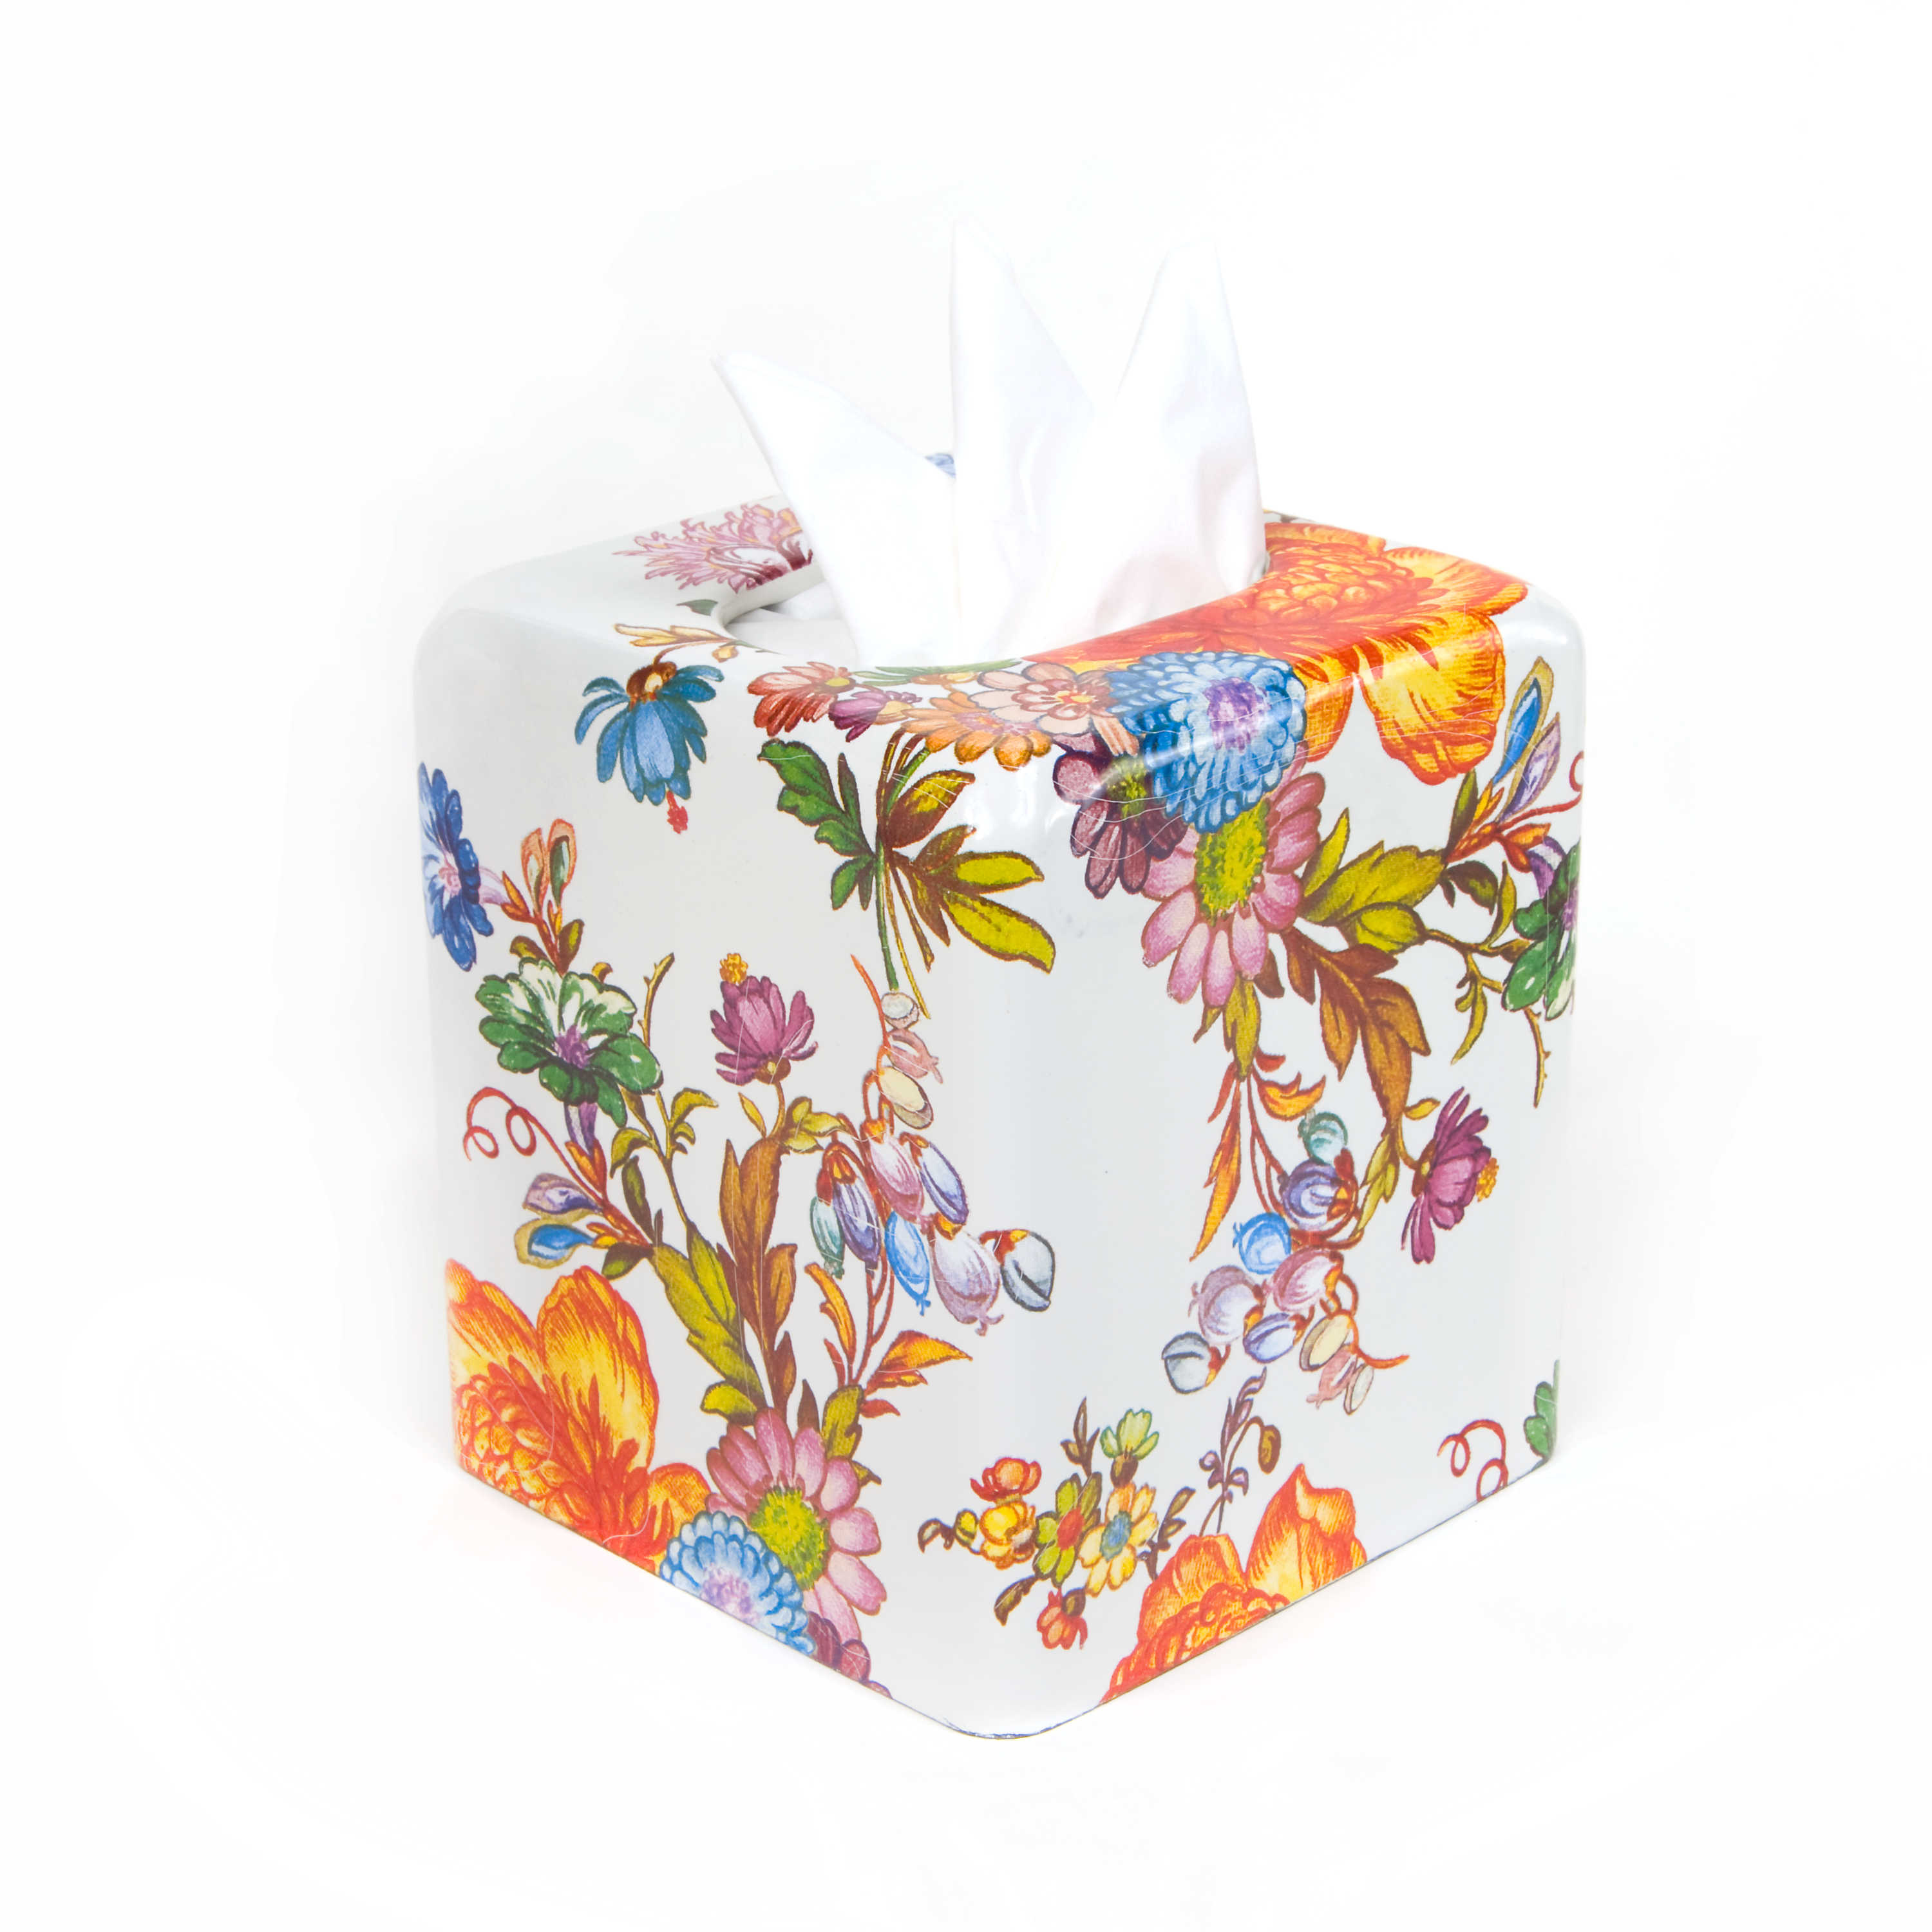 White Flower Market Boutique Tissue Box Cover mackenzie-childs Panama 0